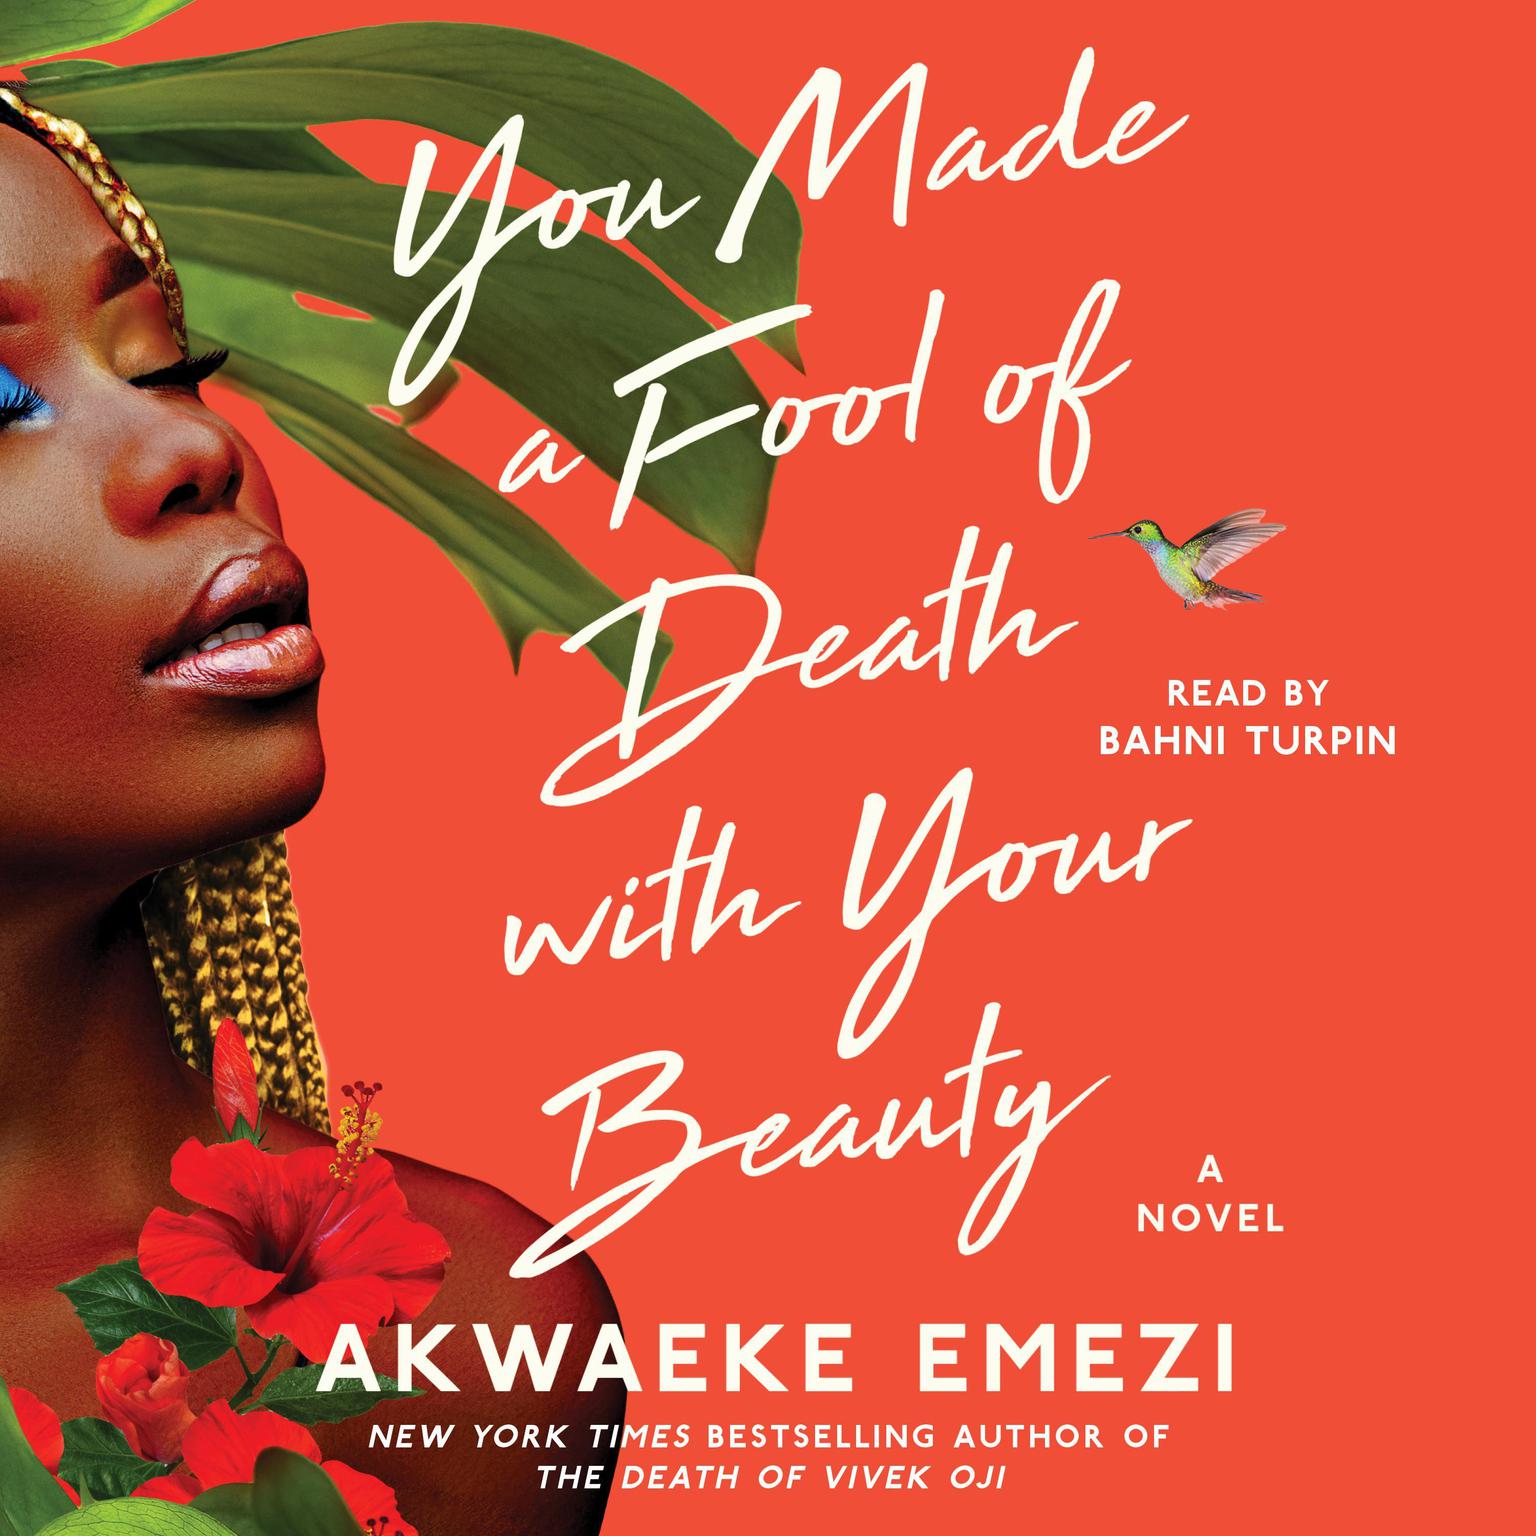 You Made a Fool of Death with Your Beauty: A Novel Audiobook, by Akwaeke Emezi